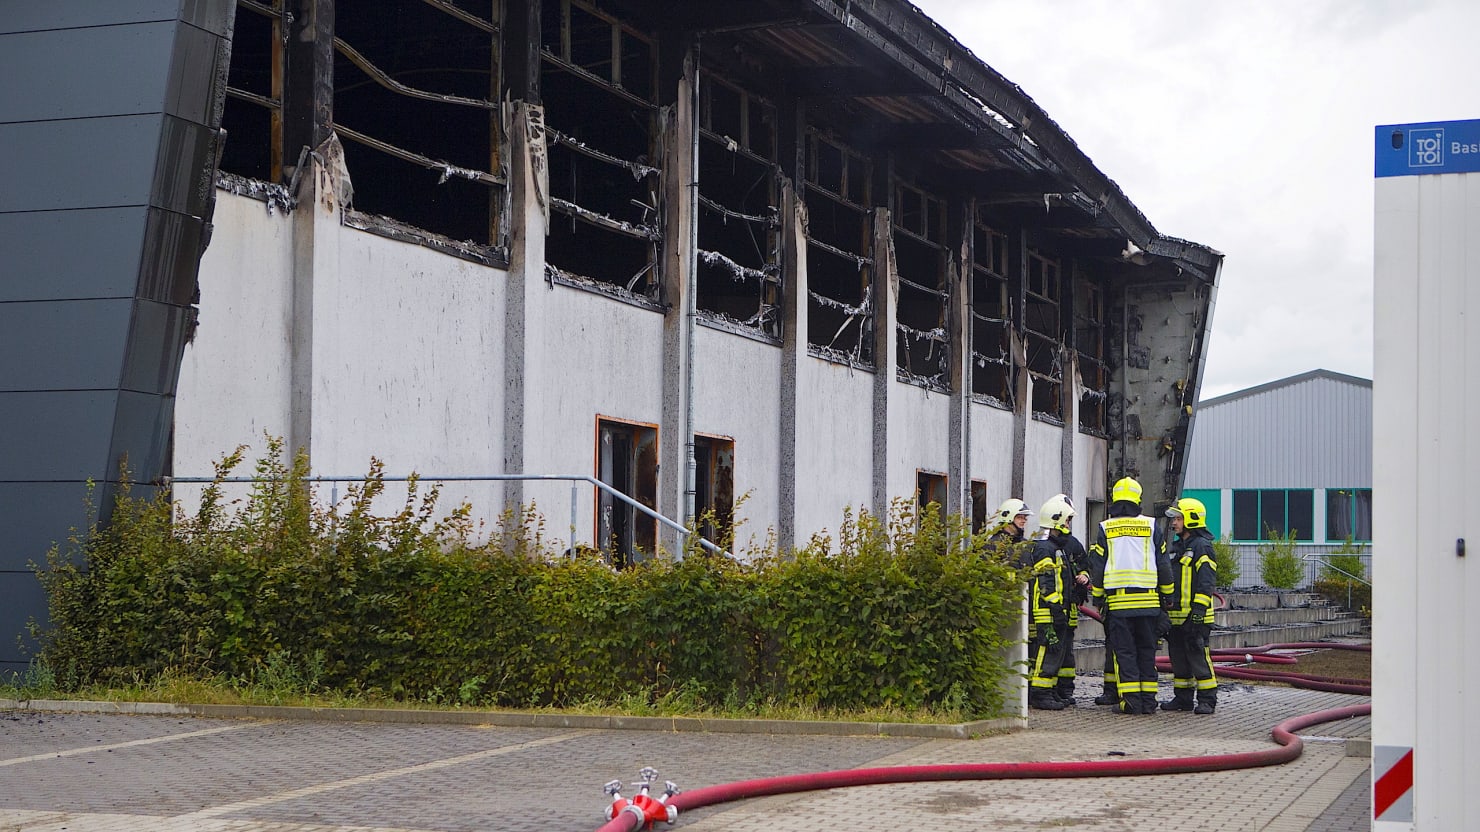 German Asylum Shelter Burns in Arson